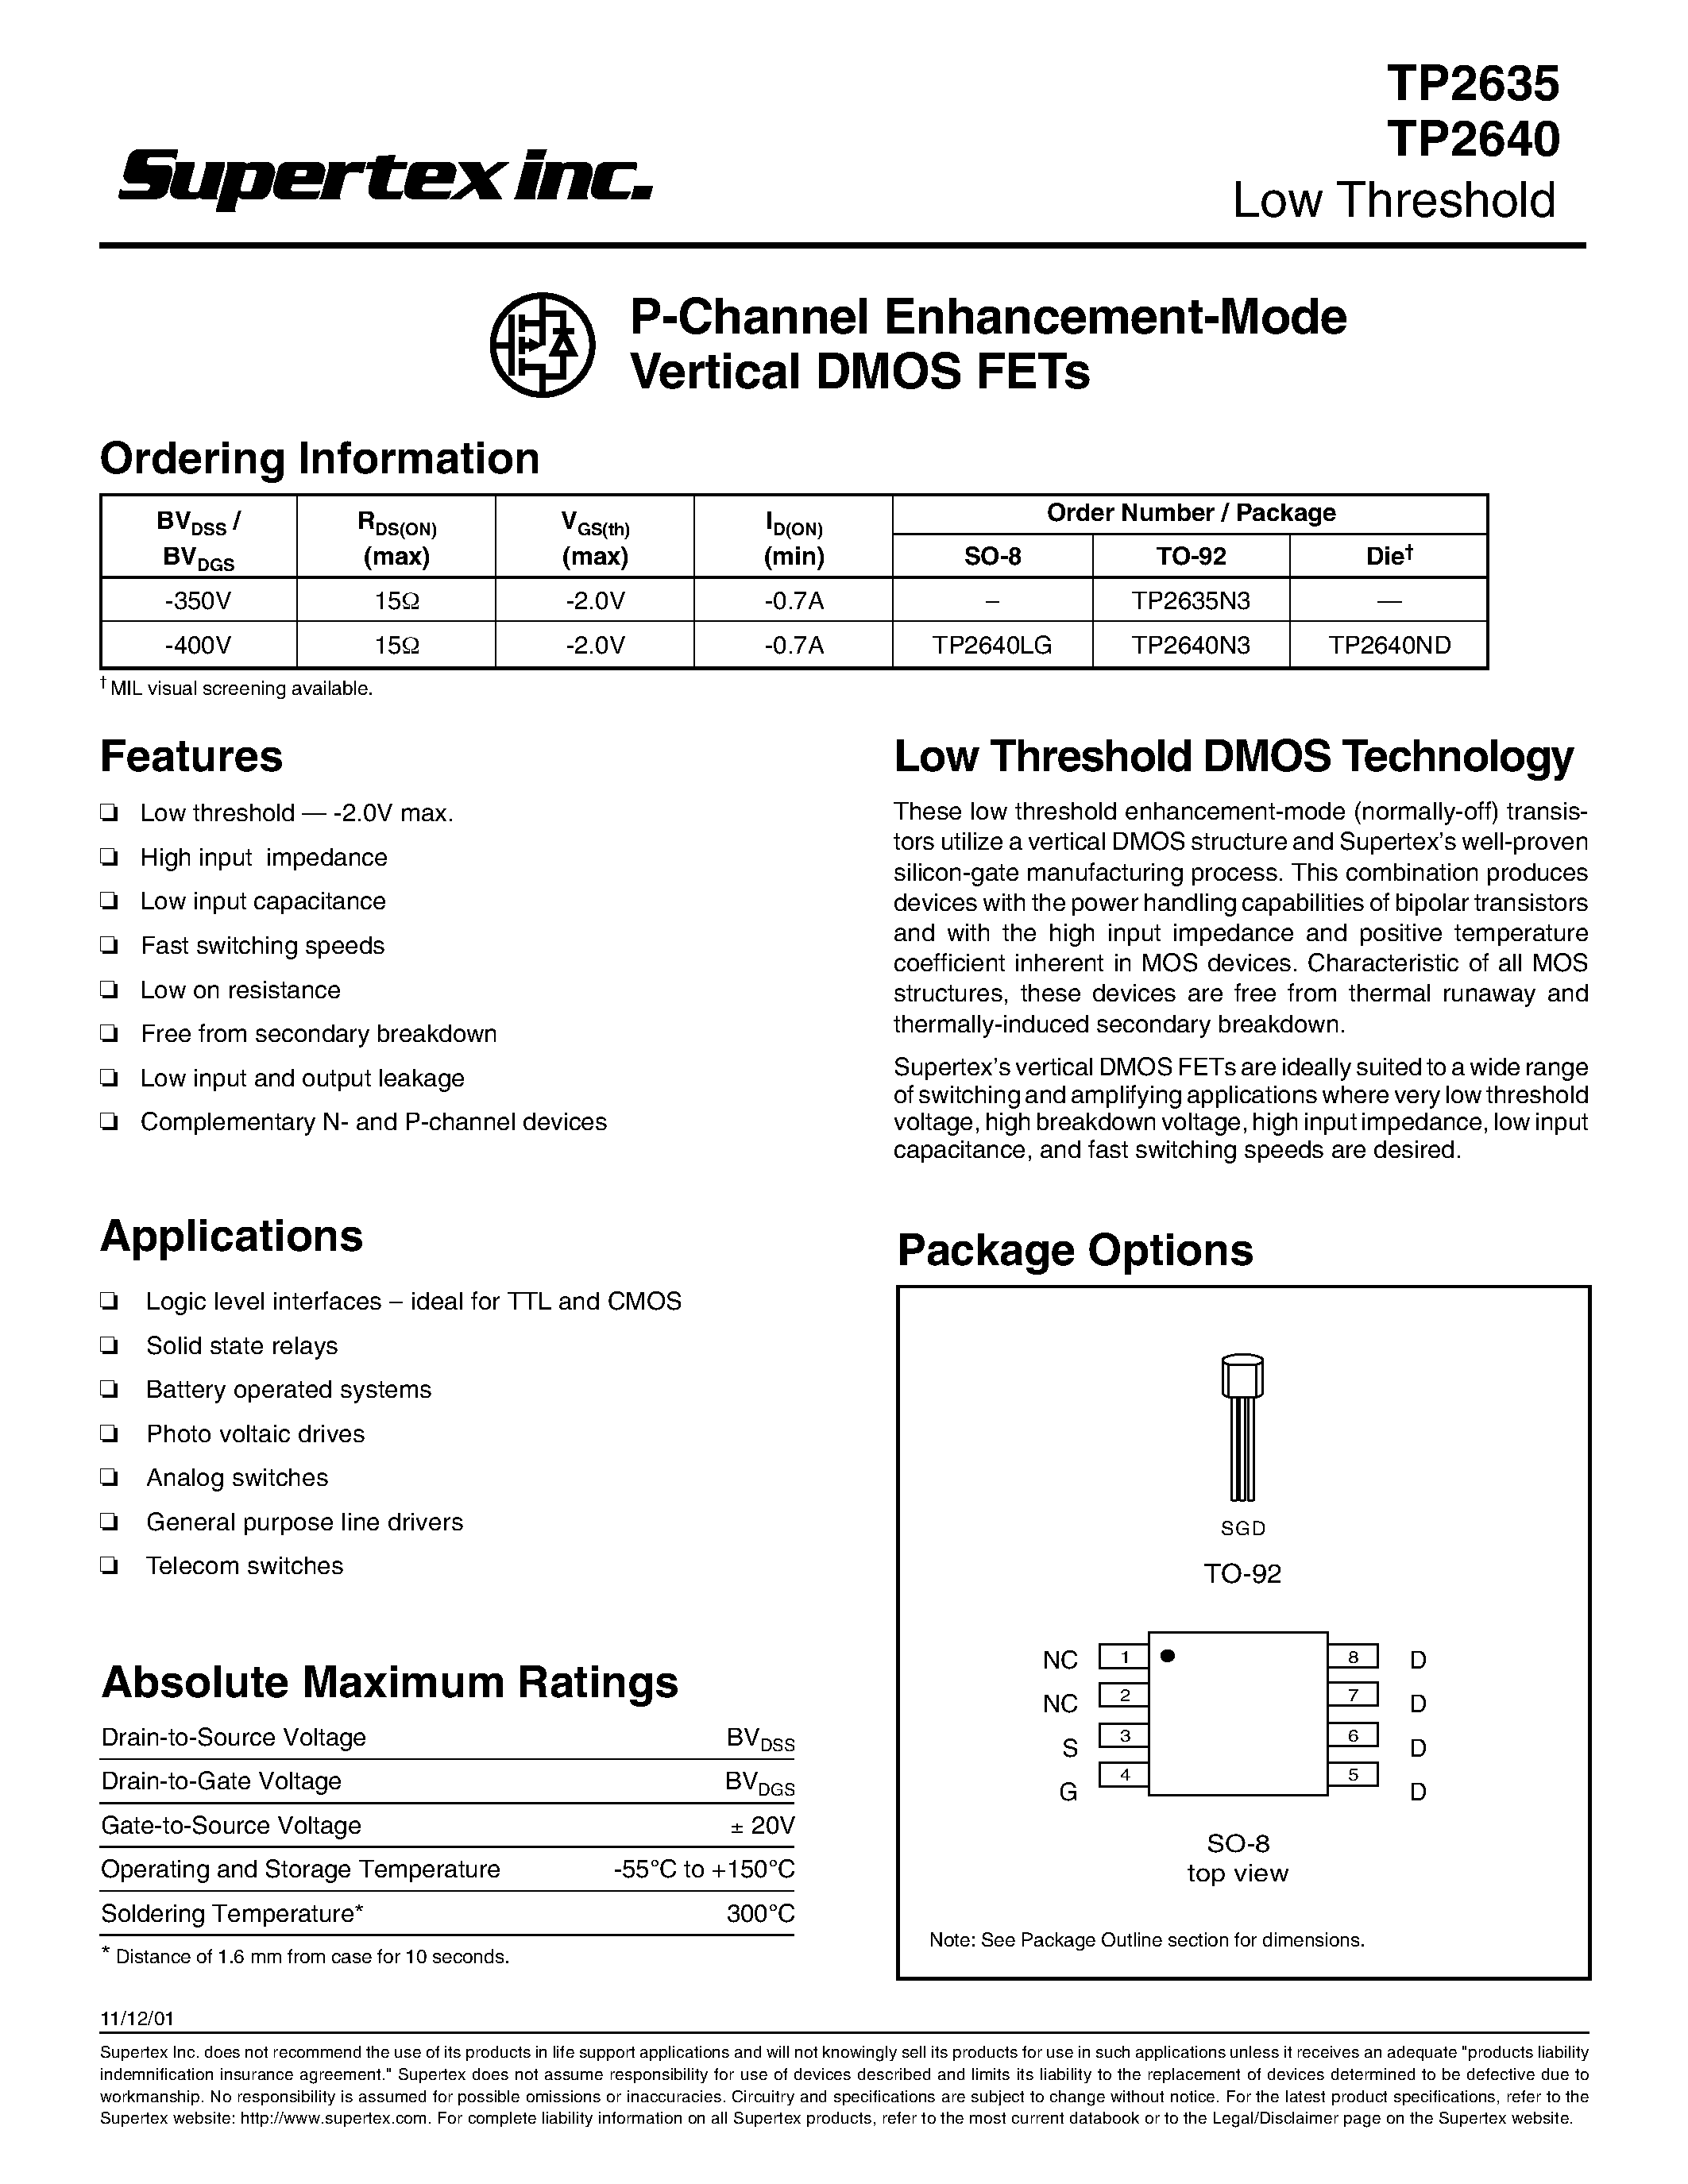 Datasheet TP2640ND - P-Channel Enhancement-Mode Vertical DMOS FETs page 1